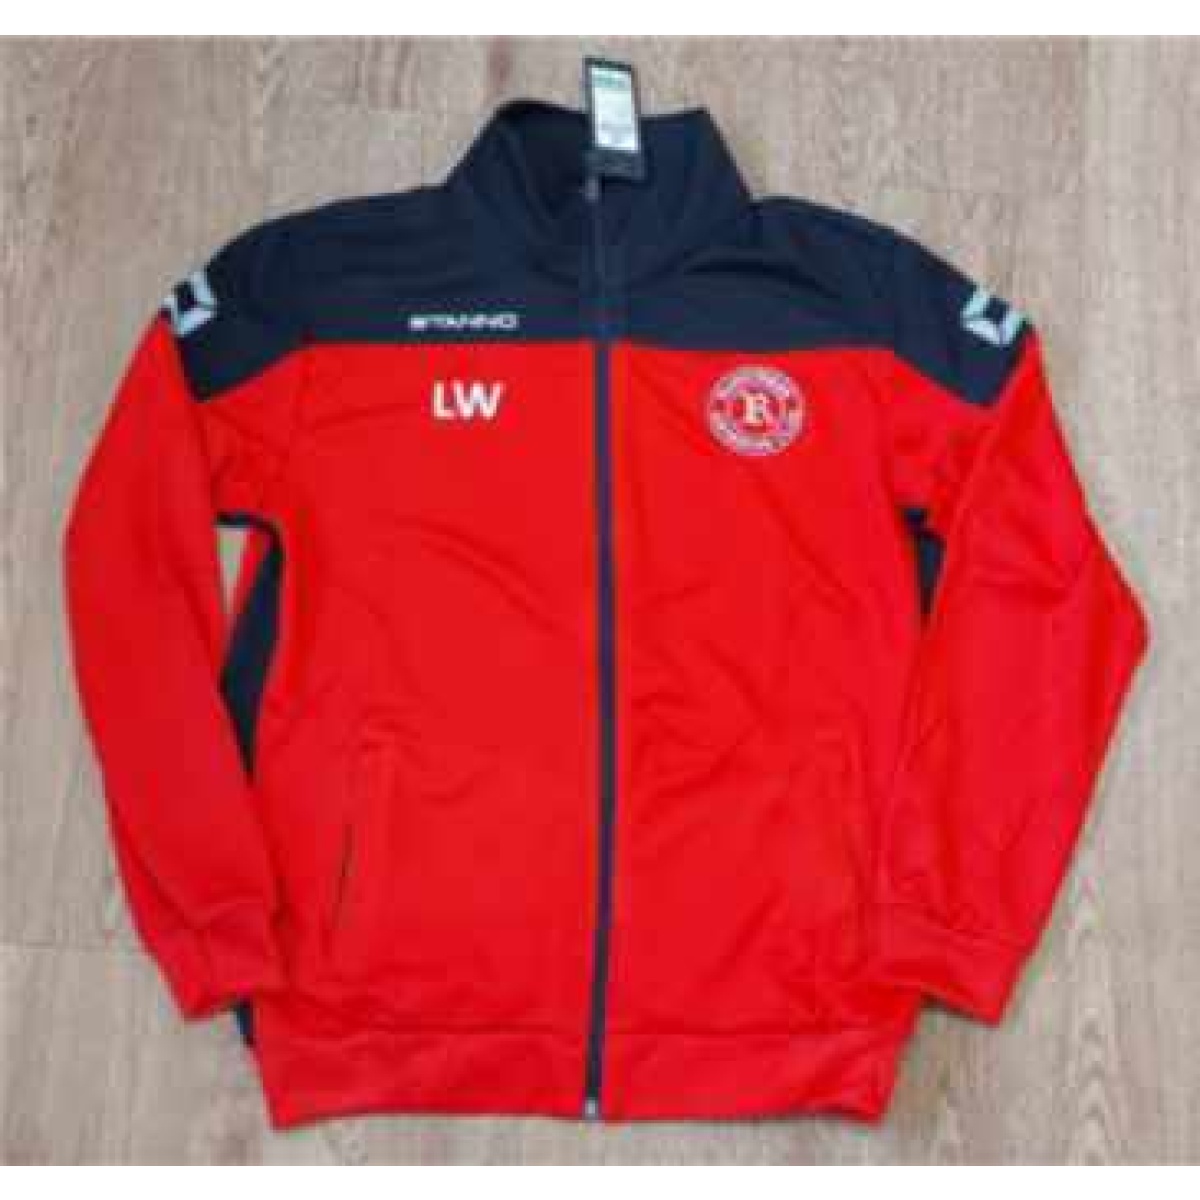 Runnymede Swimming Clu - Unisex Sports style Track Jacket, Runnymede Swimming Club